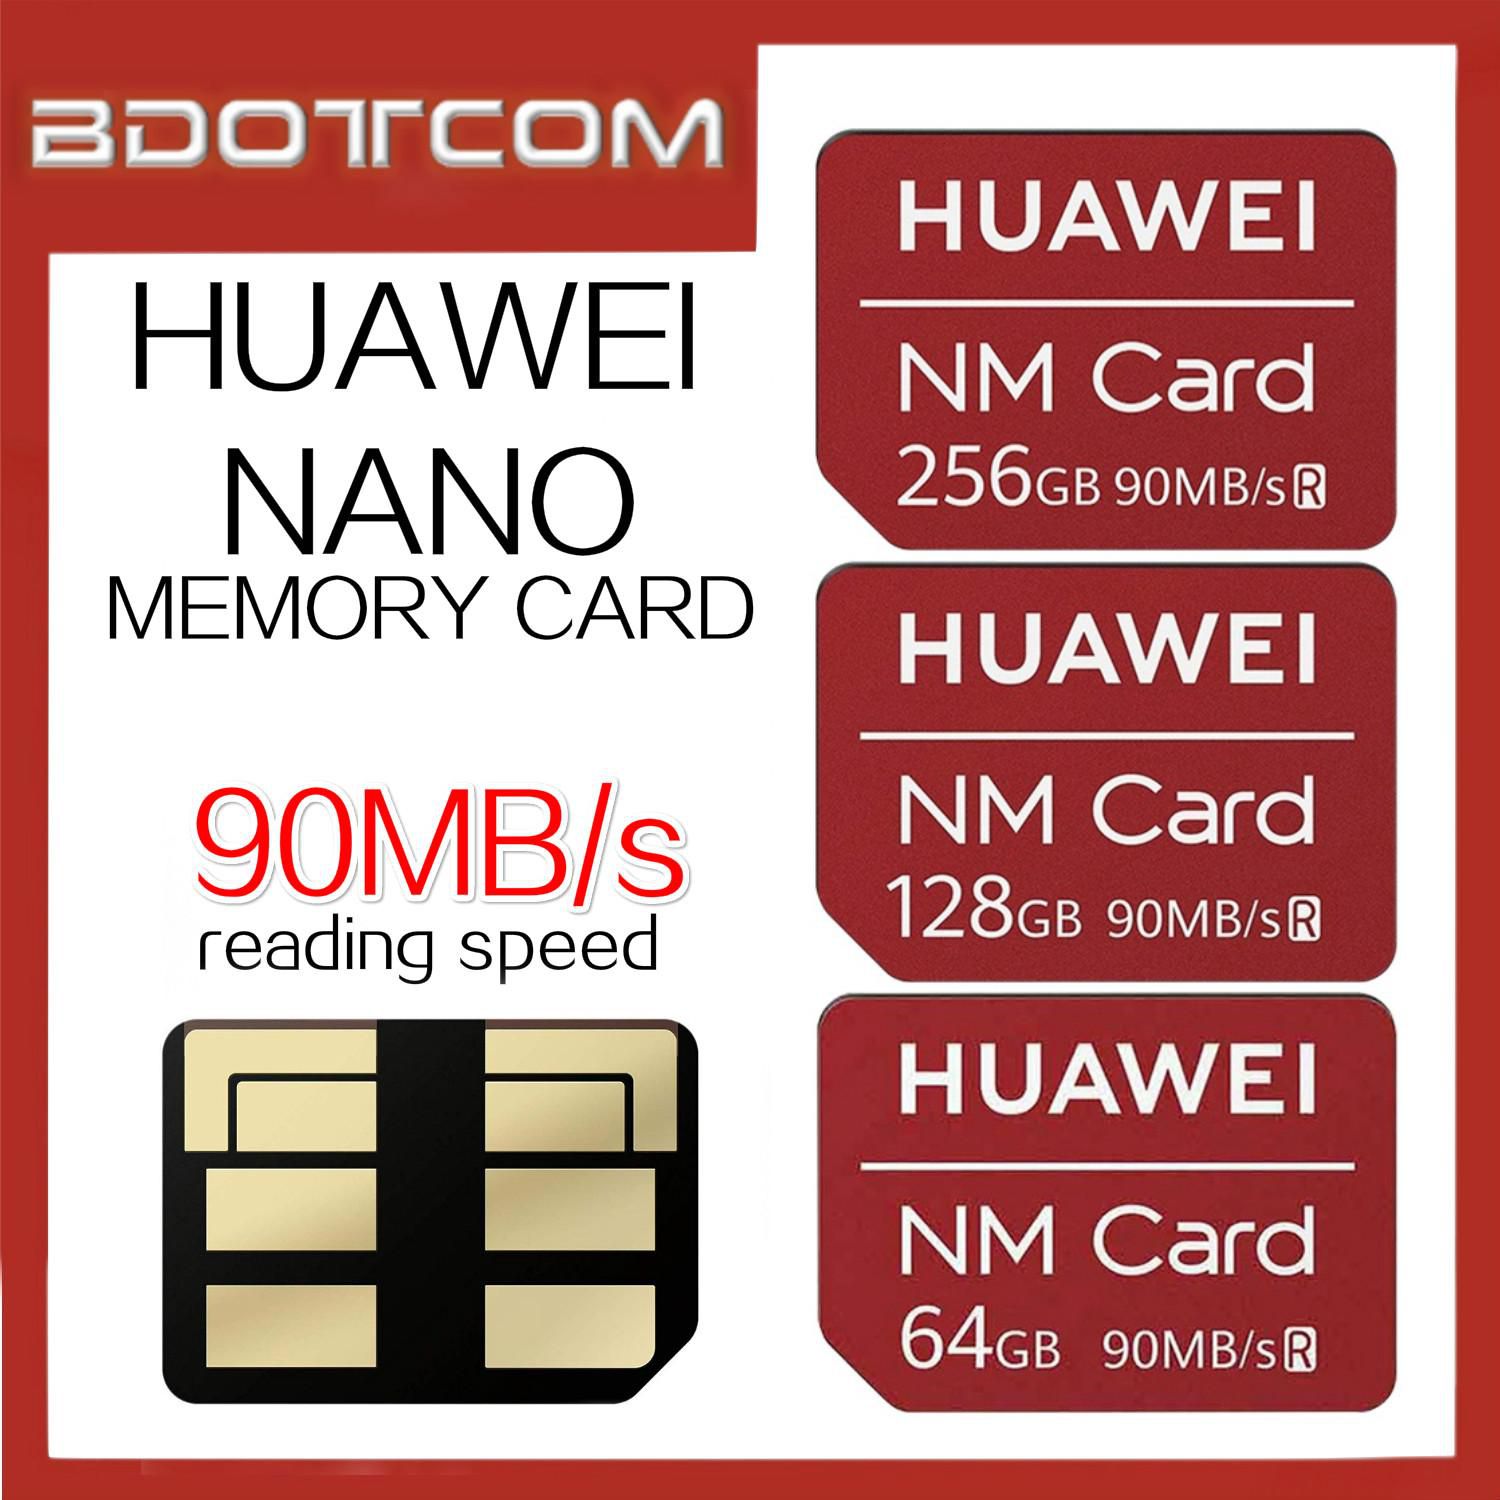 HUAWEI Nano Memory Card or NM Card 90MB/s